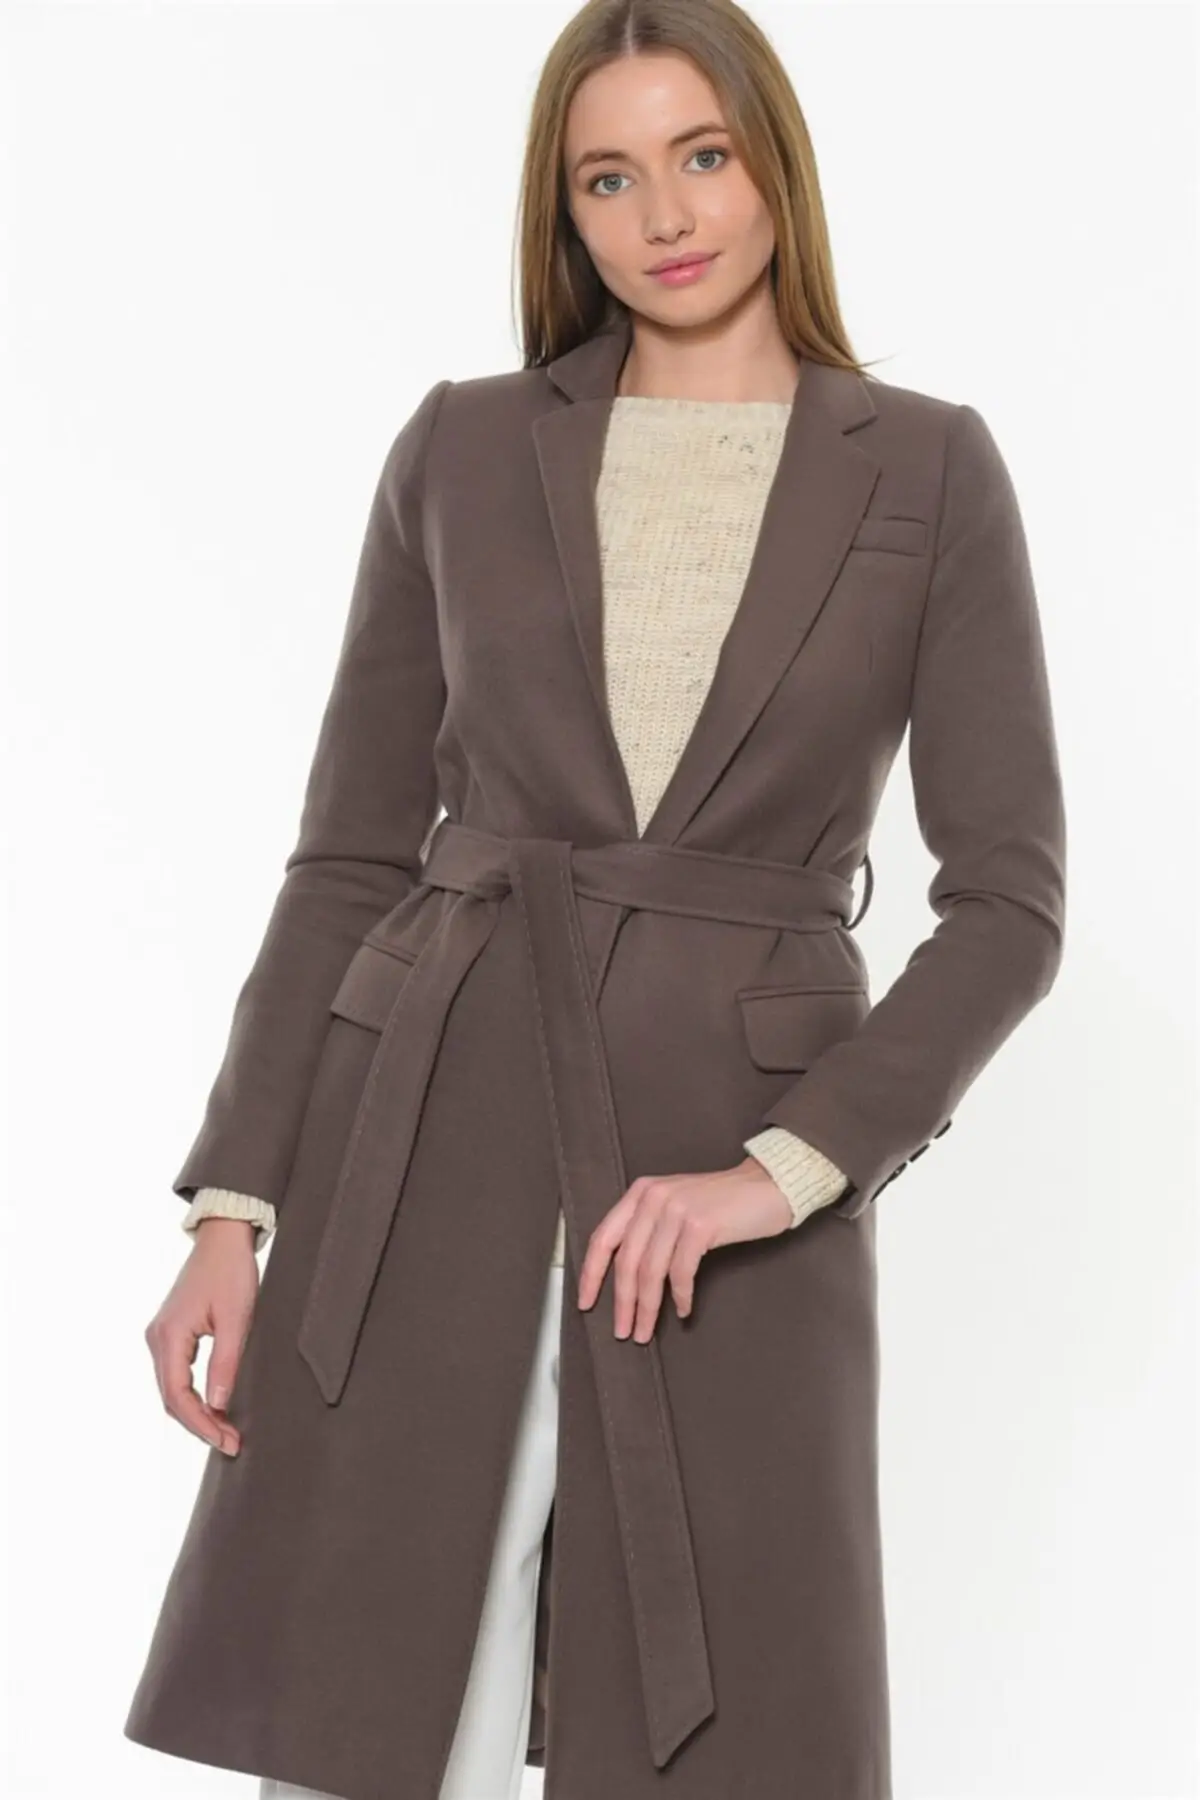 Women's Coats Mink Color Long Sleeve Thick Belt Stylish Elegant Useful 2021 Winter Autumn Fashion Outerwear Coats